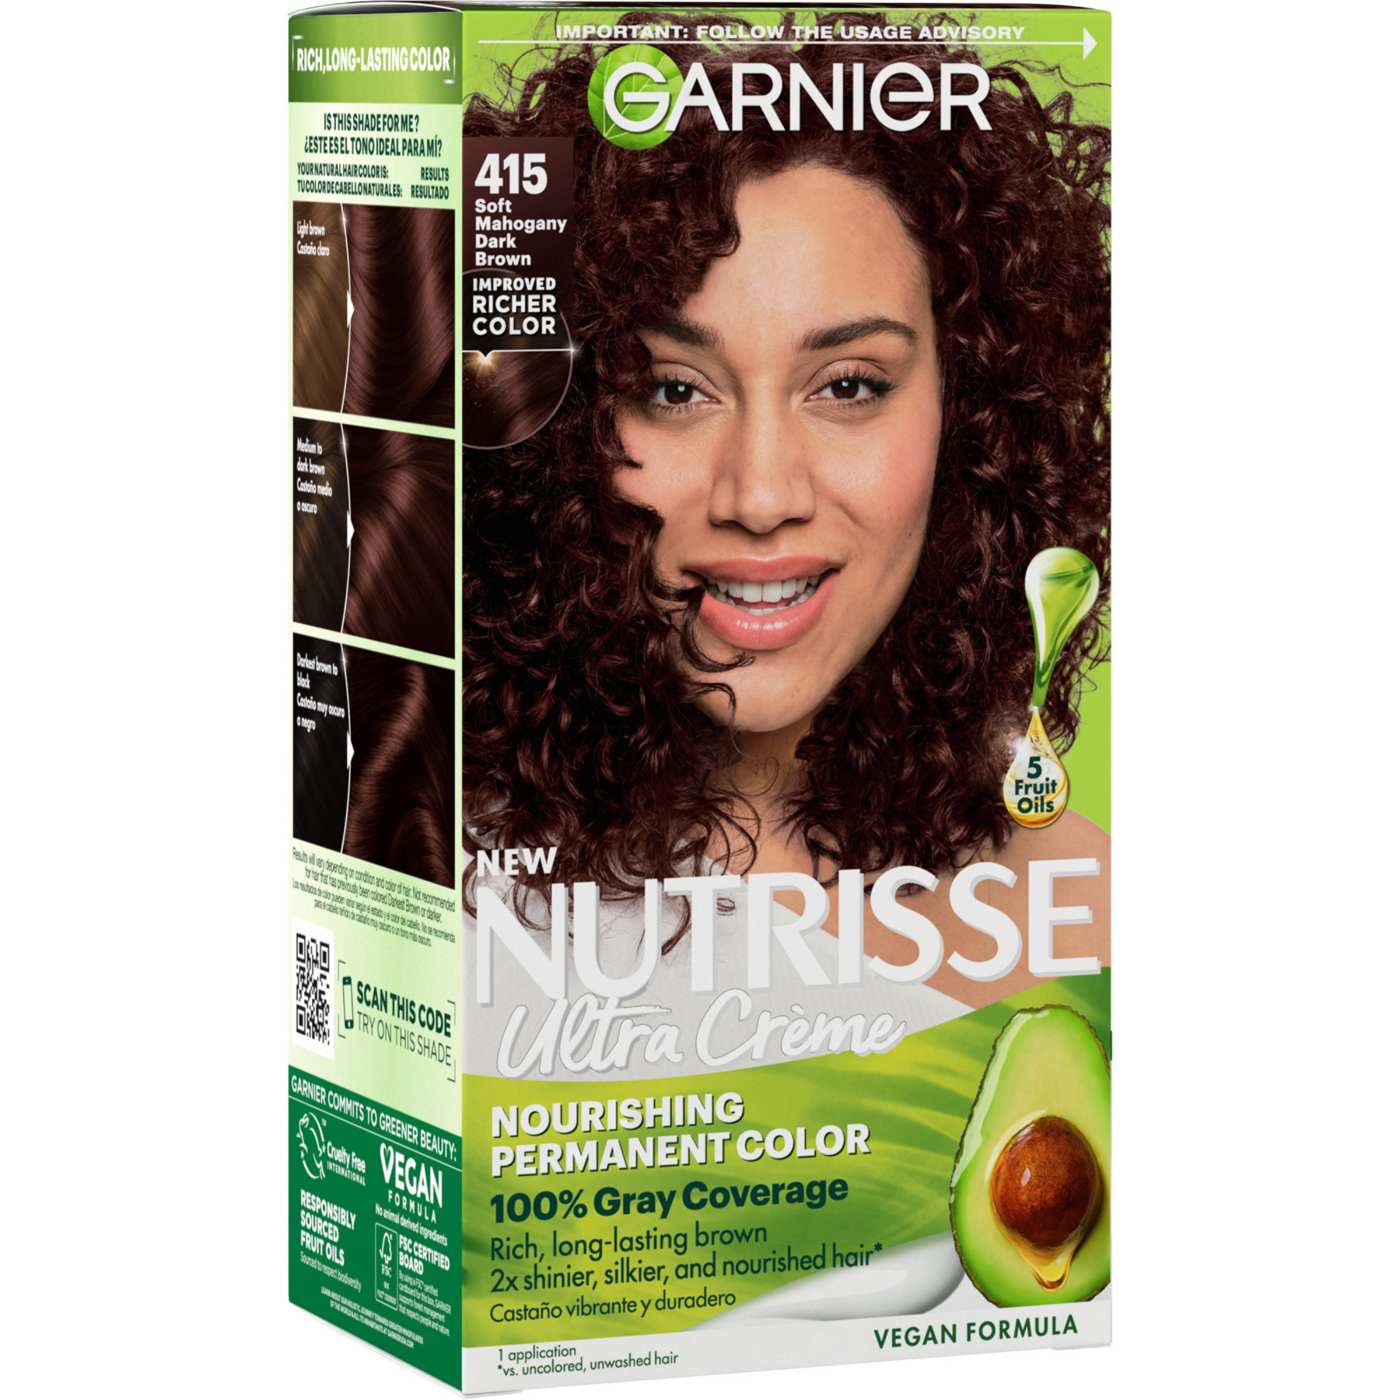 Garnier Nutrisse Nourishing Hair Color Creme - 415 Soft Mahogany Drk Brown (Raspberry Truffle); image 3 of 16